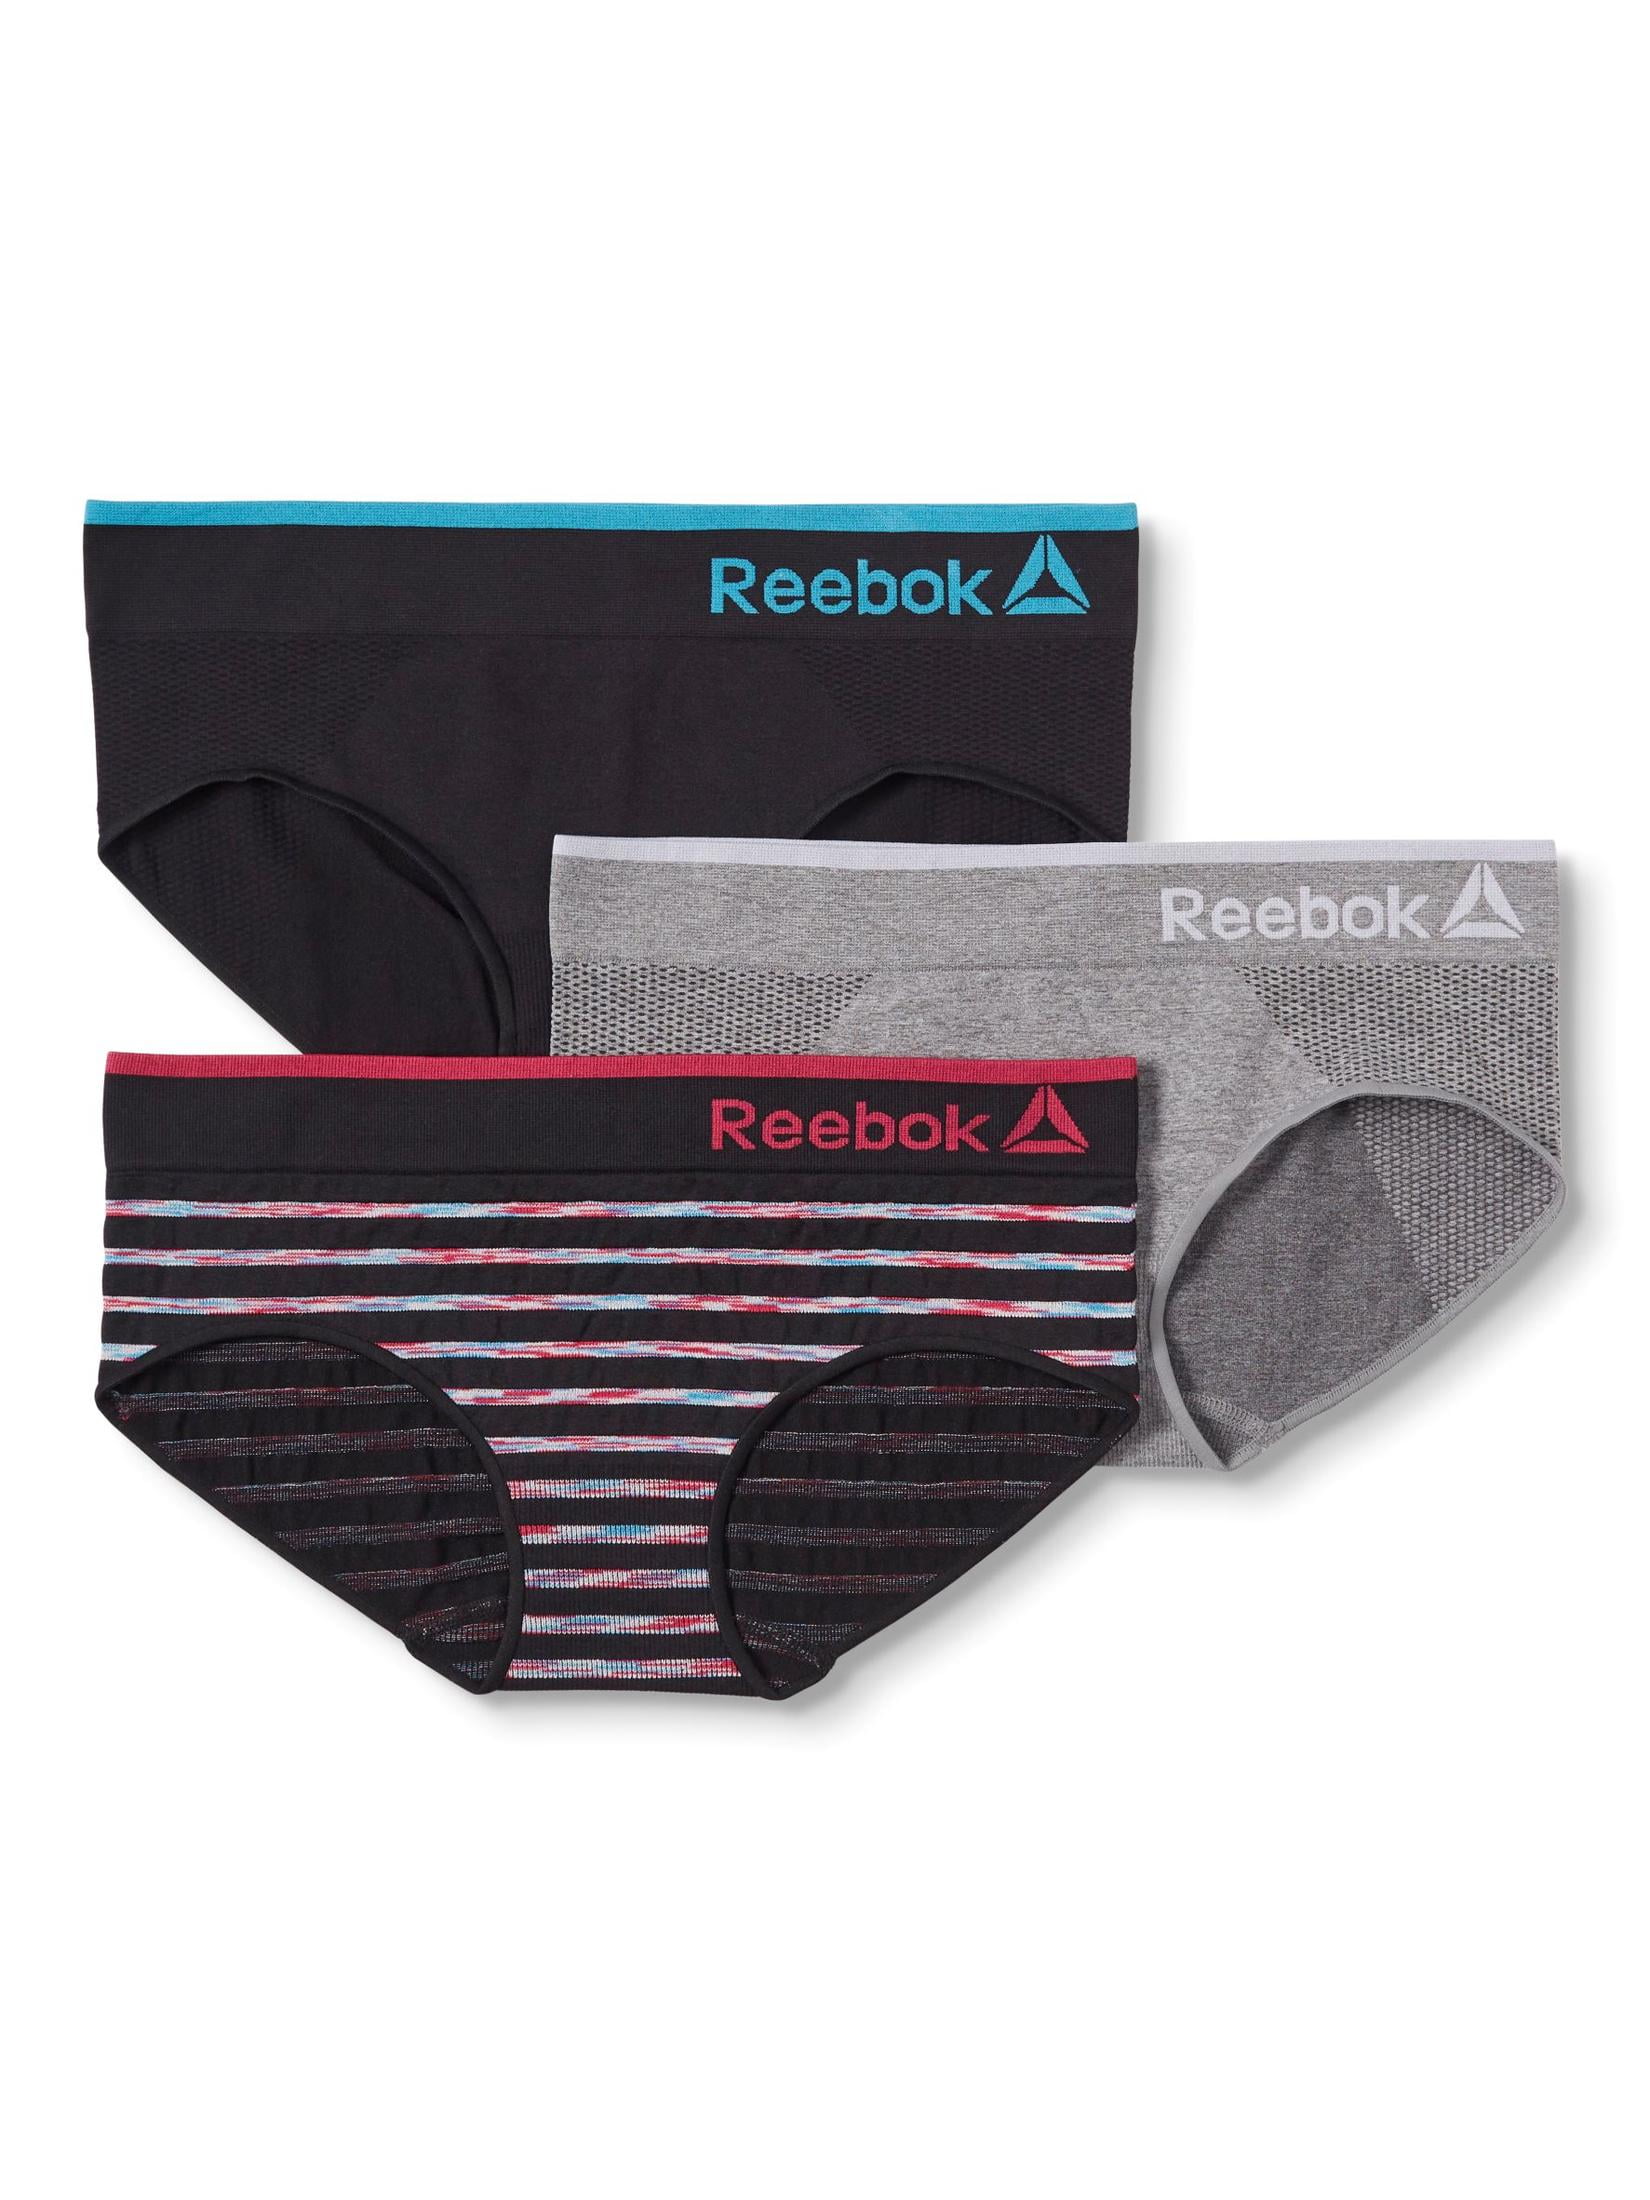  Reebok Women's Underwear – 5 Pack Seamless Hipster Briefs (S-XL),  Size Medium, Black Spacedye/Rose/Black/Light Pink/Charcoal : Clothing,  Shoes & Jewelry